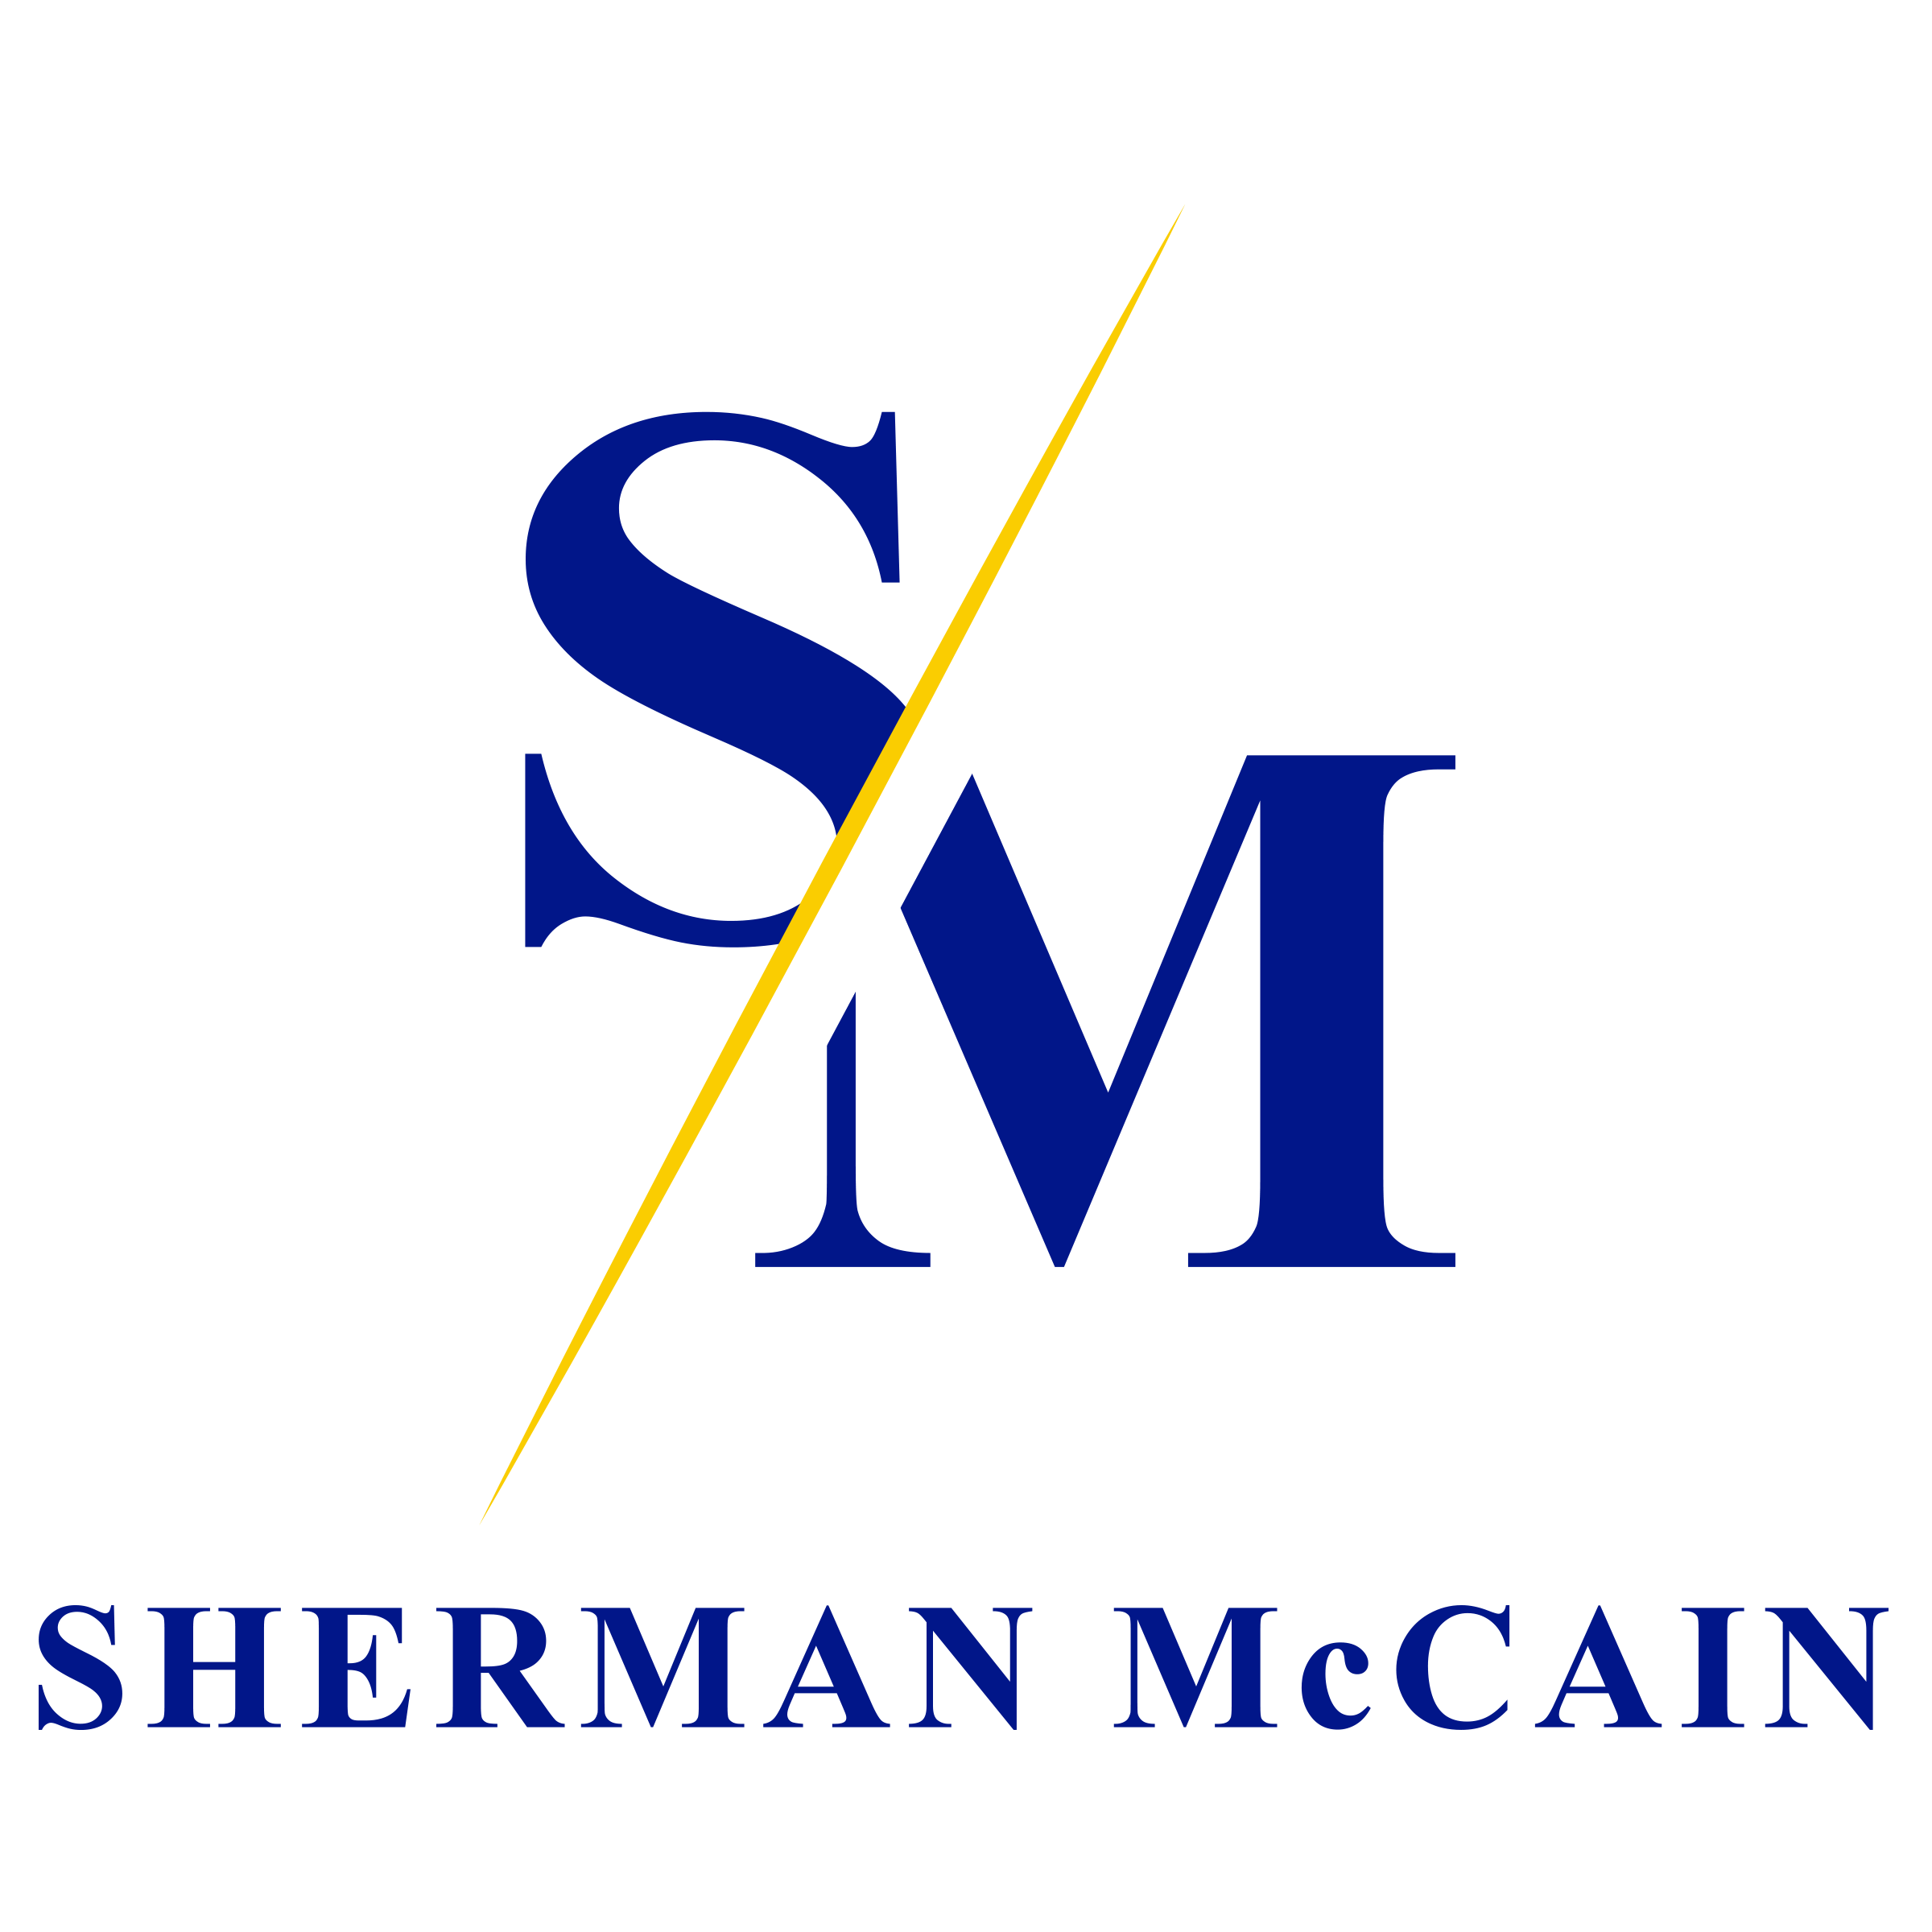 Sherman McCain Photography | Houston Portrait, Lifestyle & Advertising Photographer